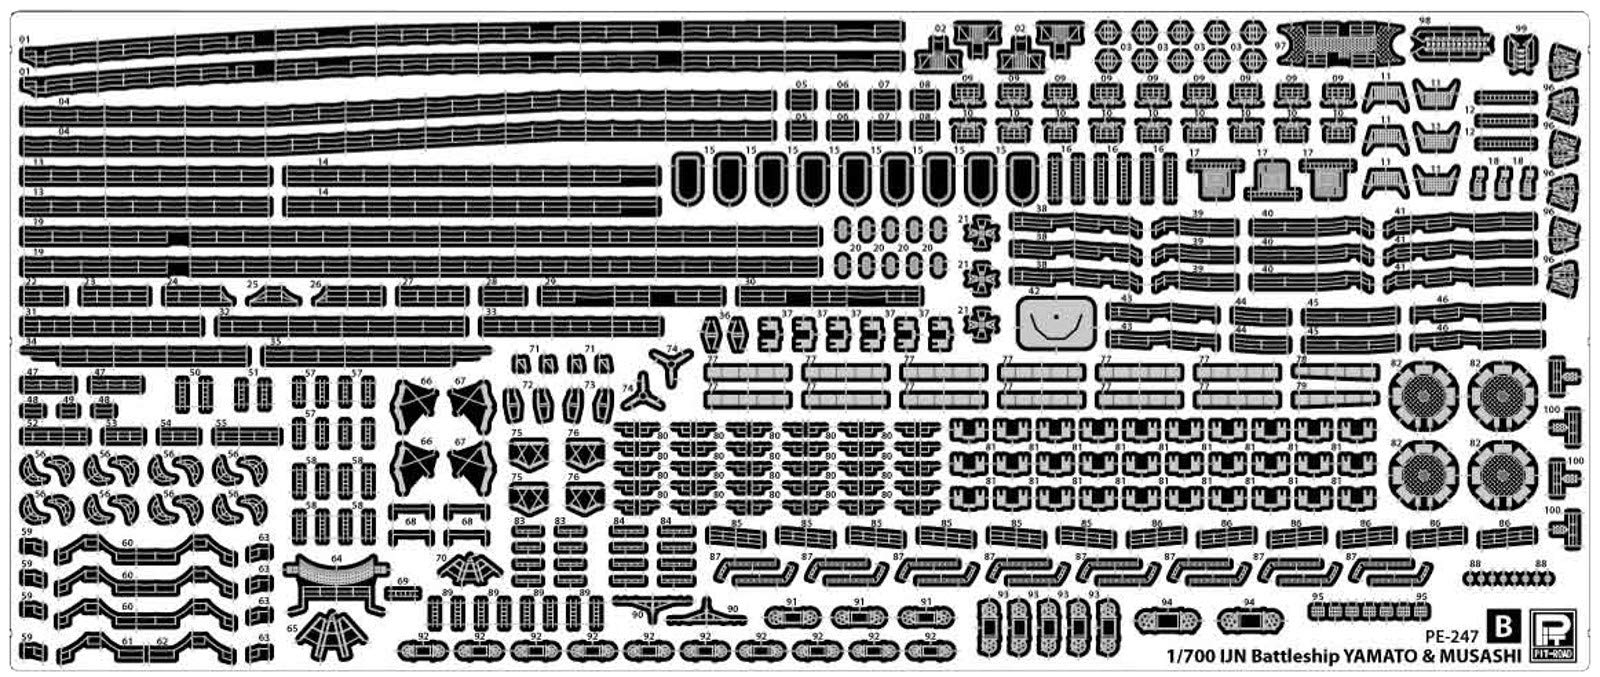 Pit-Road Genuine Upgrade Parts Set for Ijn Battleship Yamato 1941 Plastic Model Tools